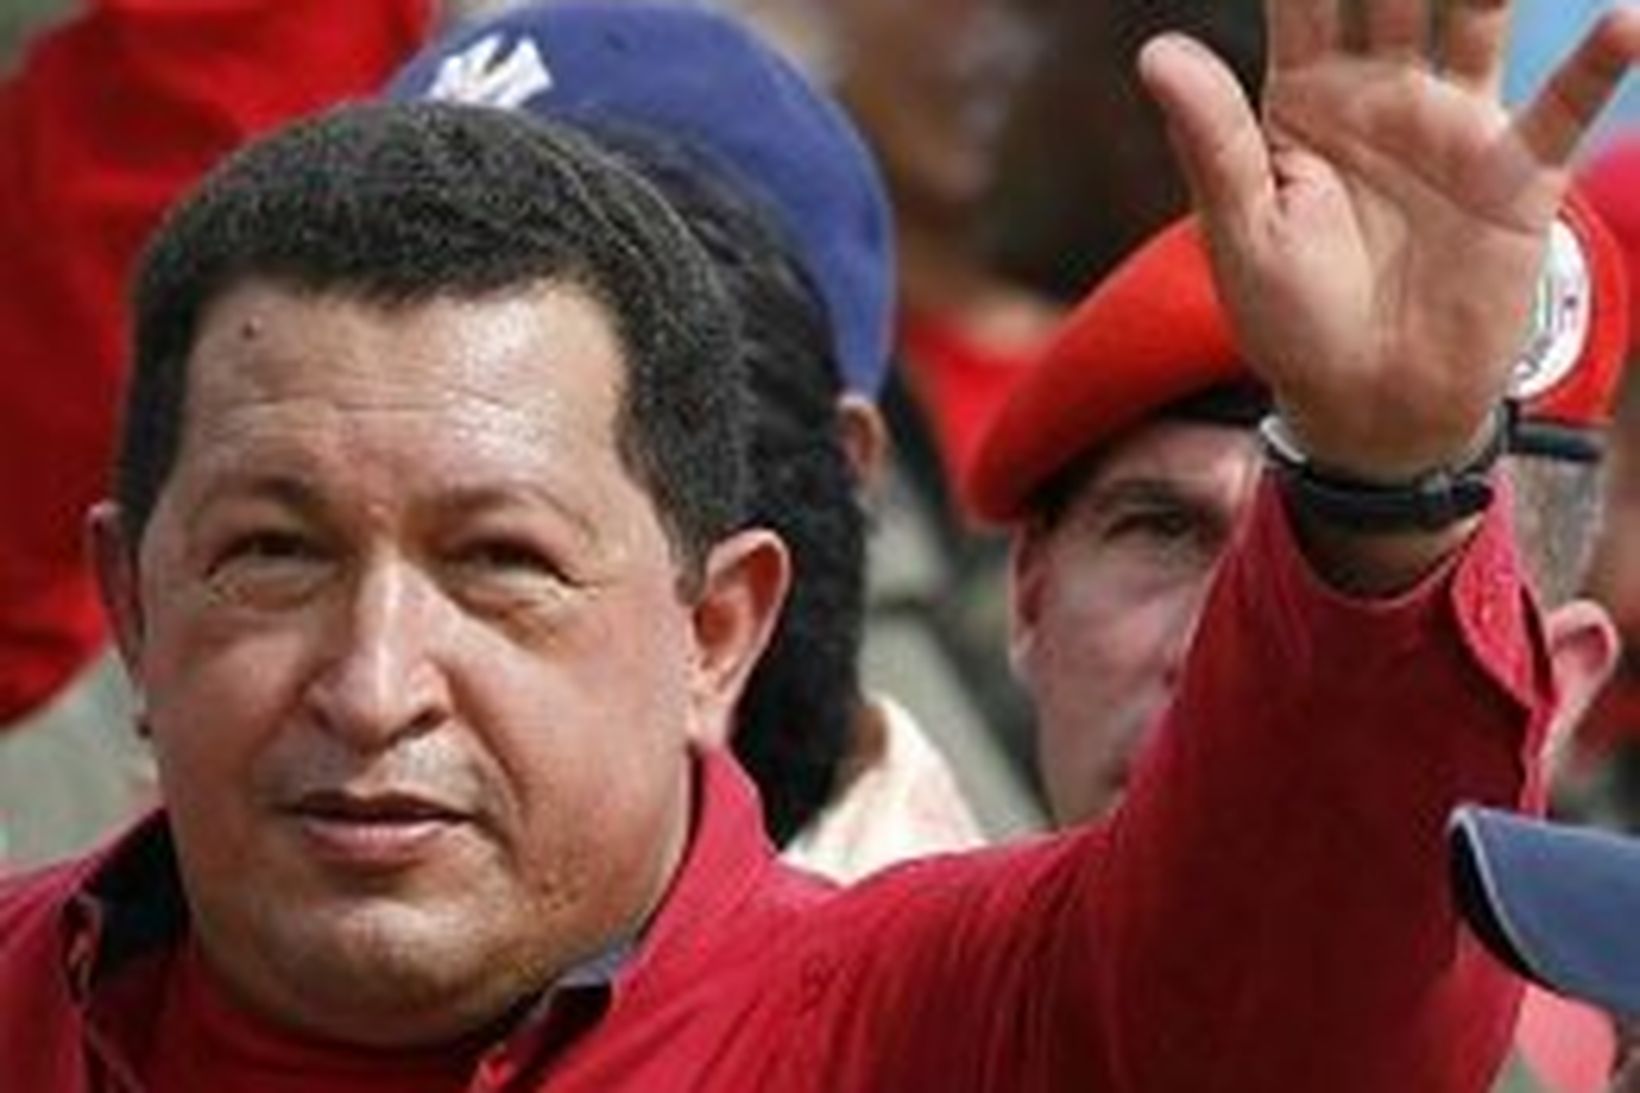 Hugo Chavez, forseti Venesúela.